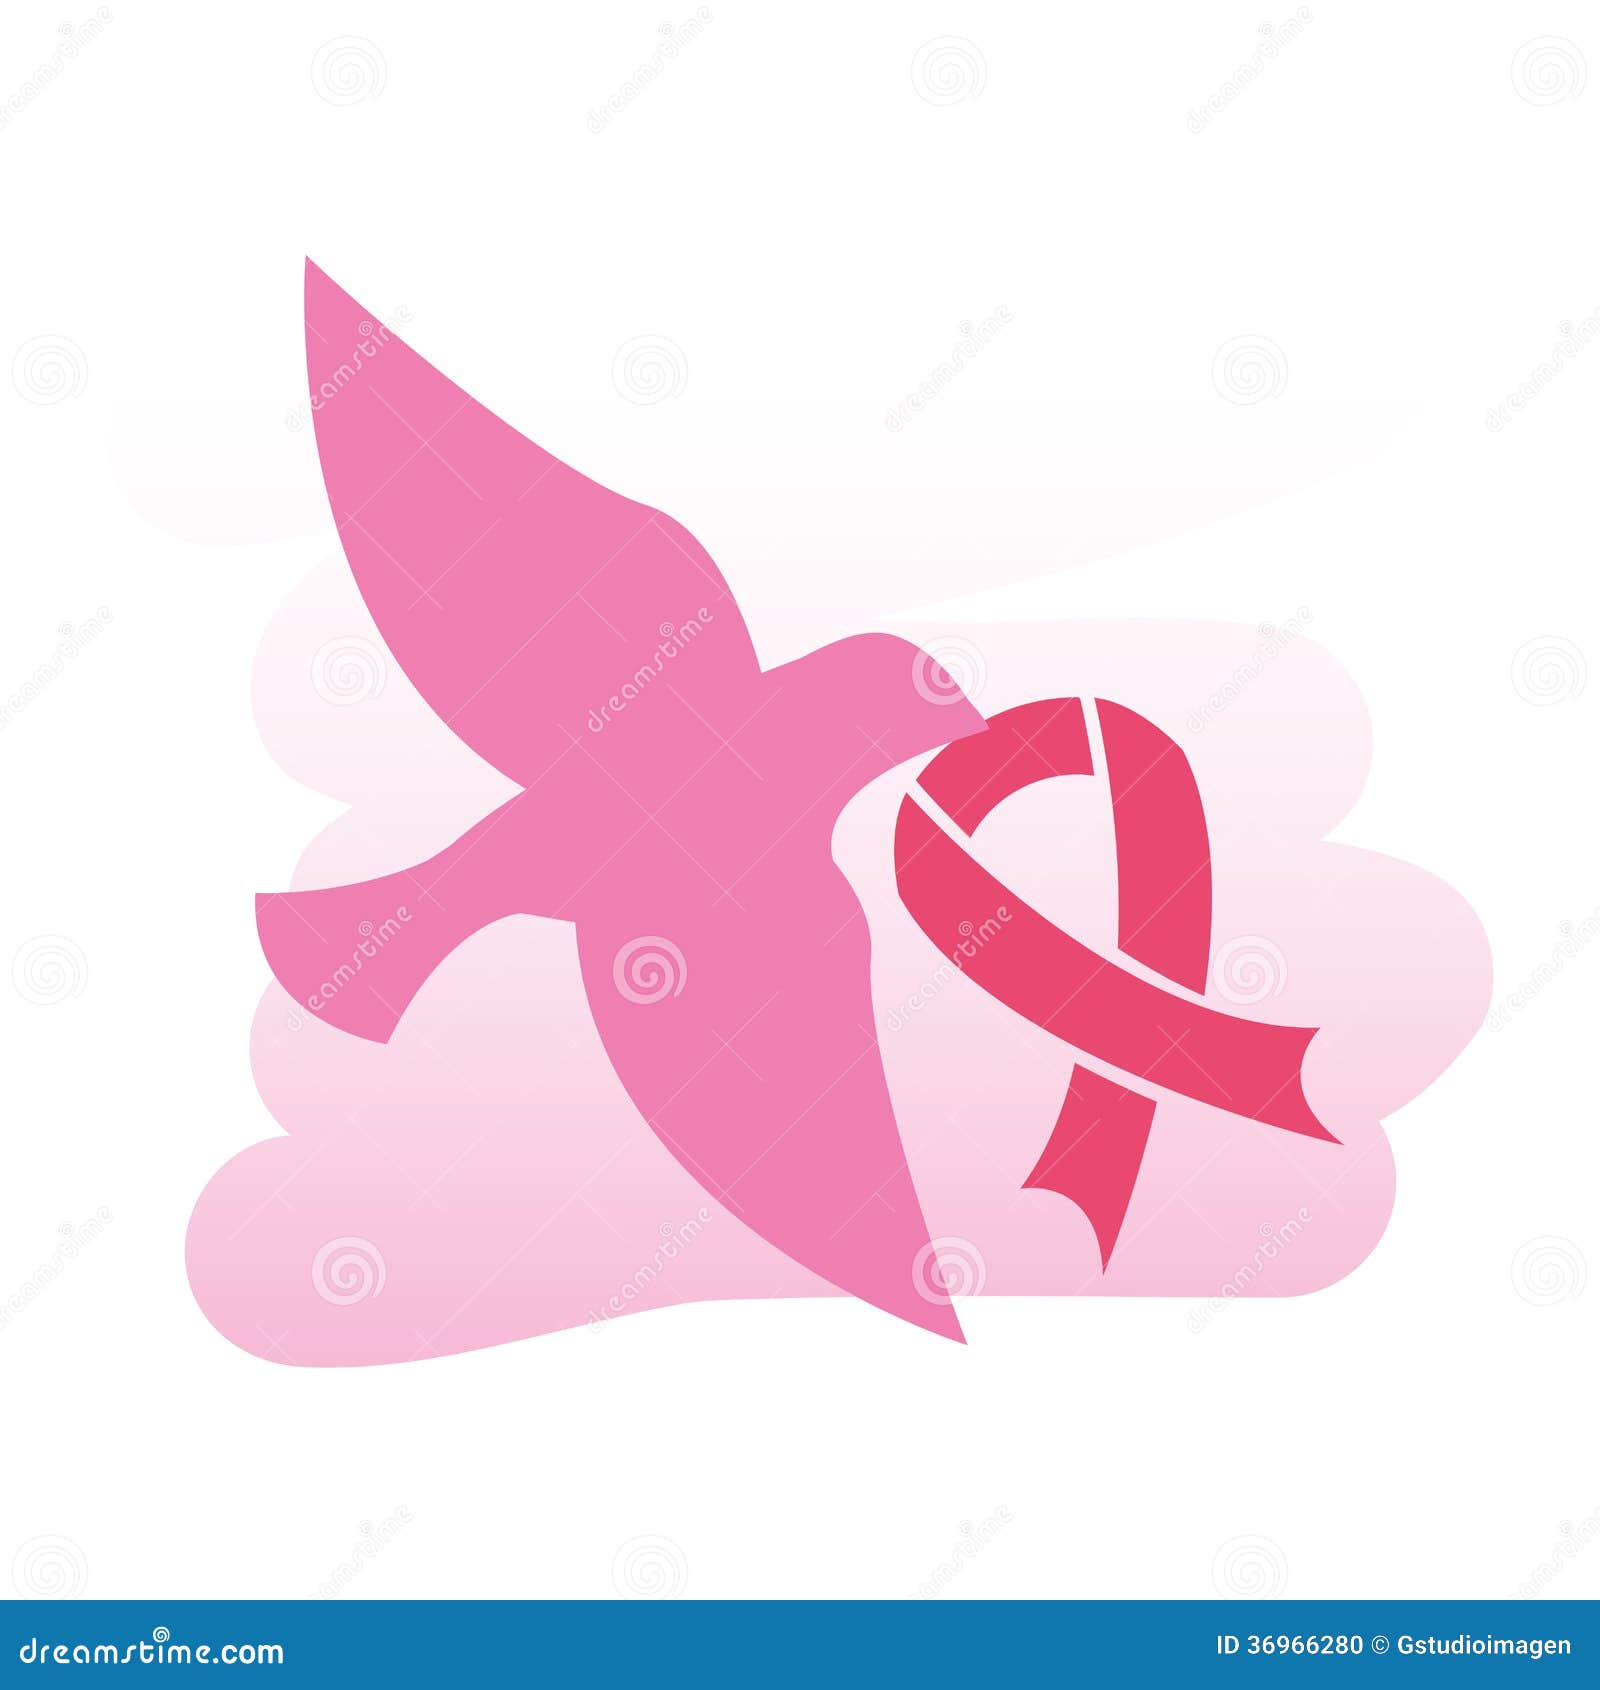 Breast cancer stock vector. Illustration of flight, graphic - 36966280